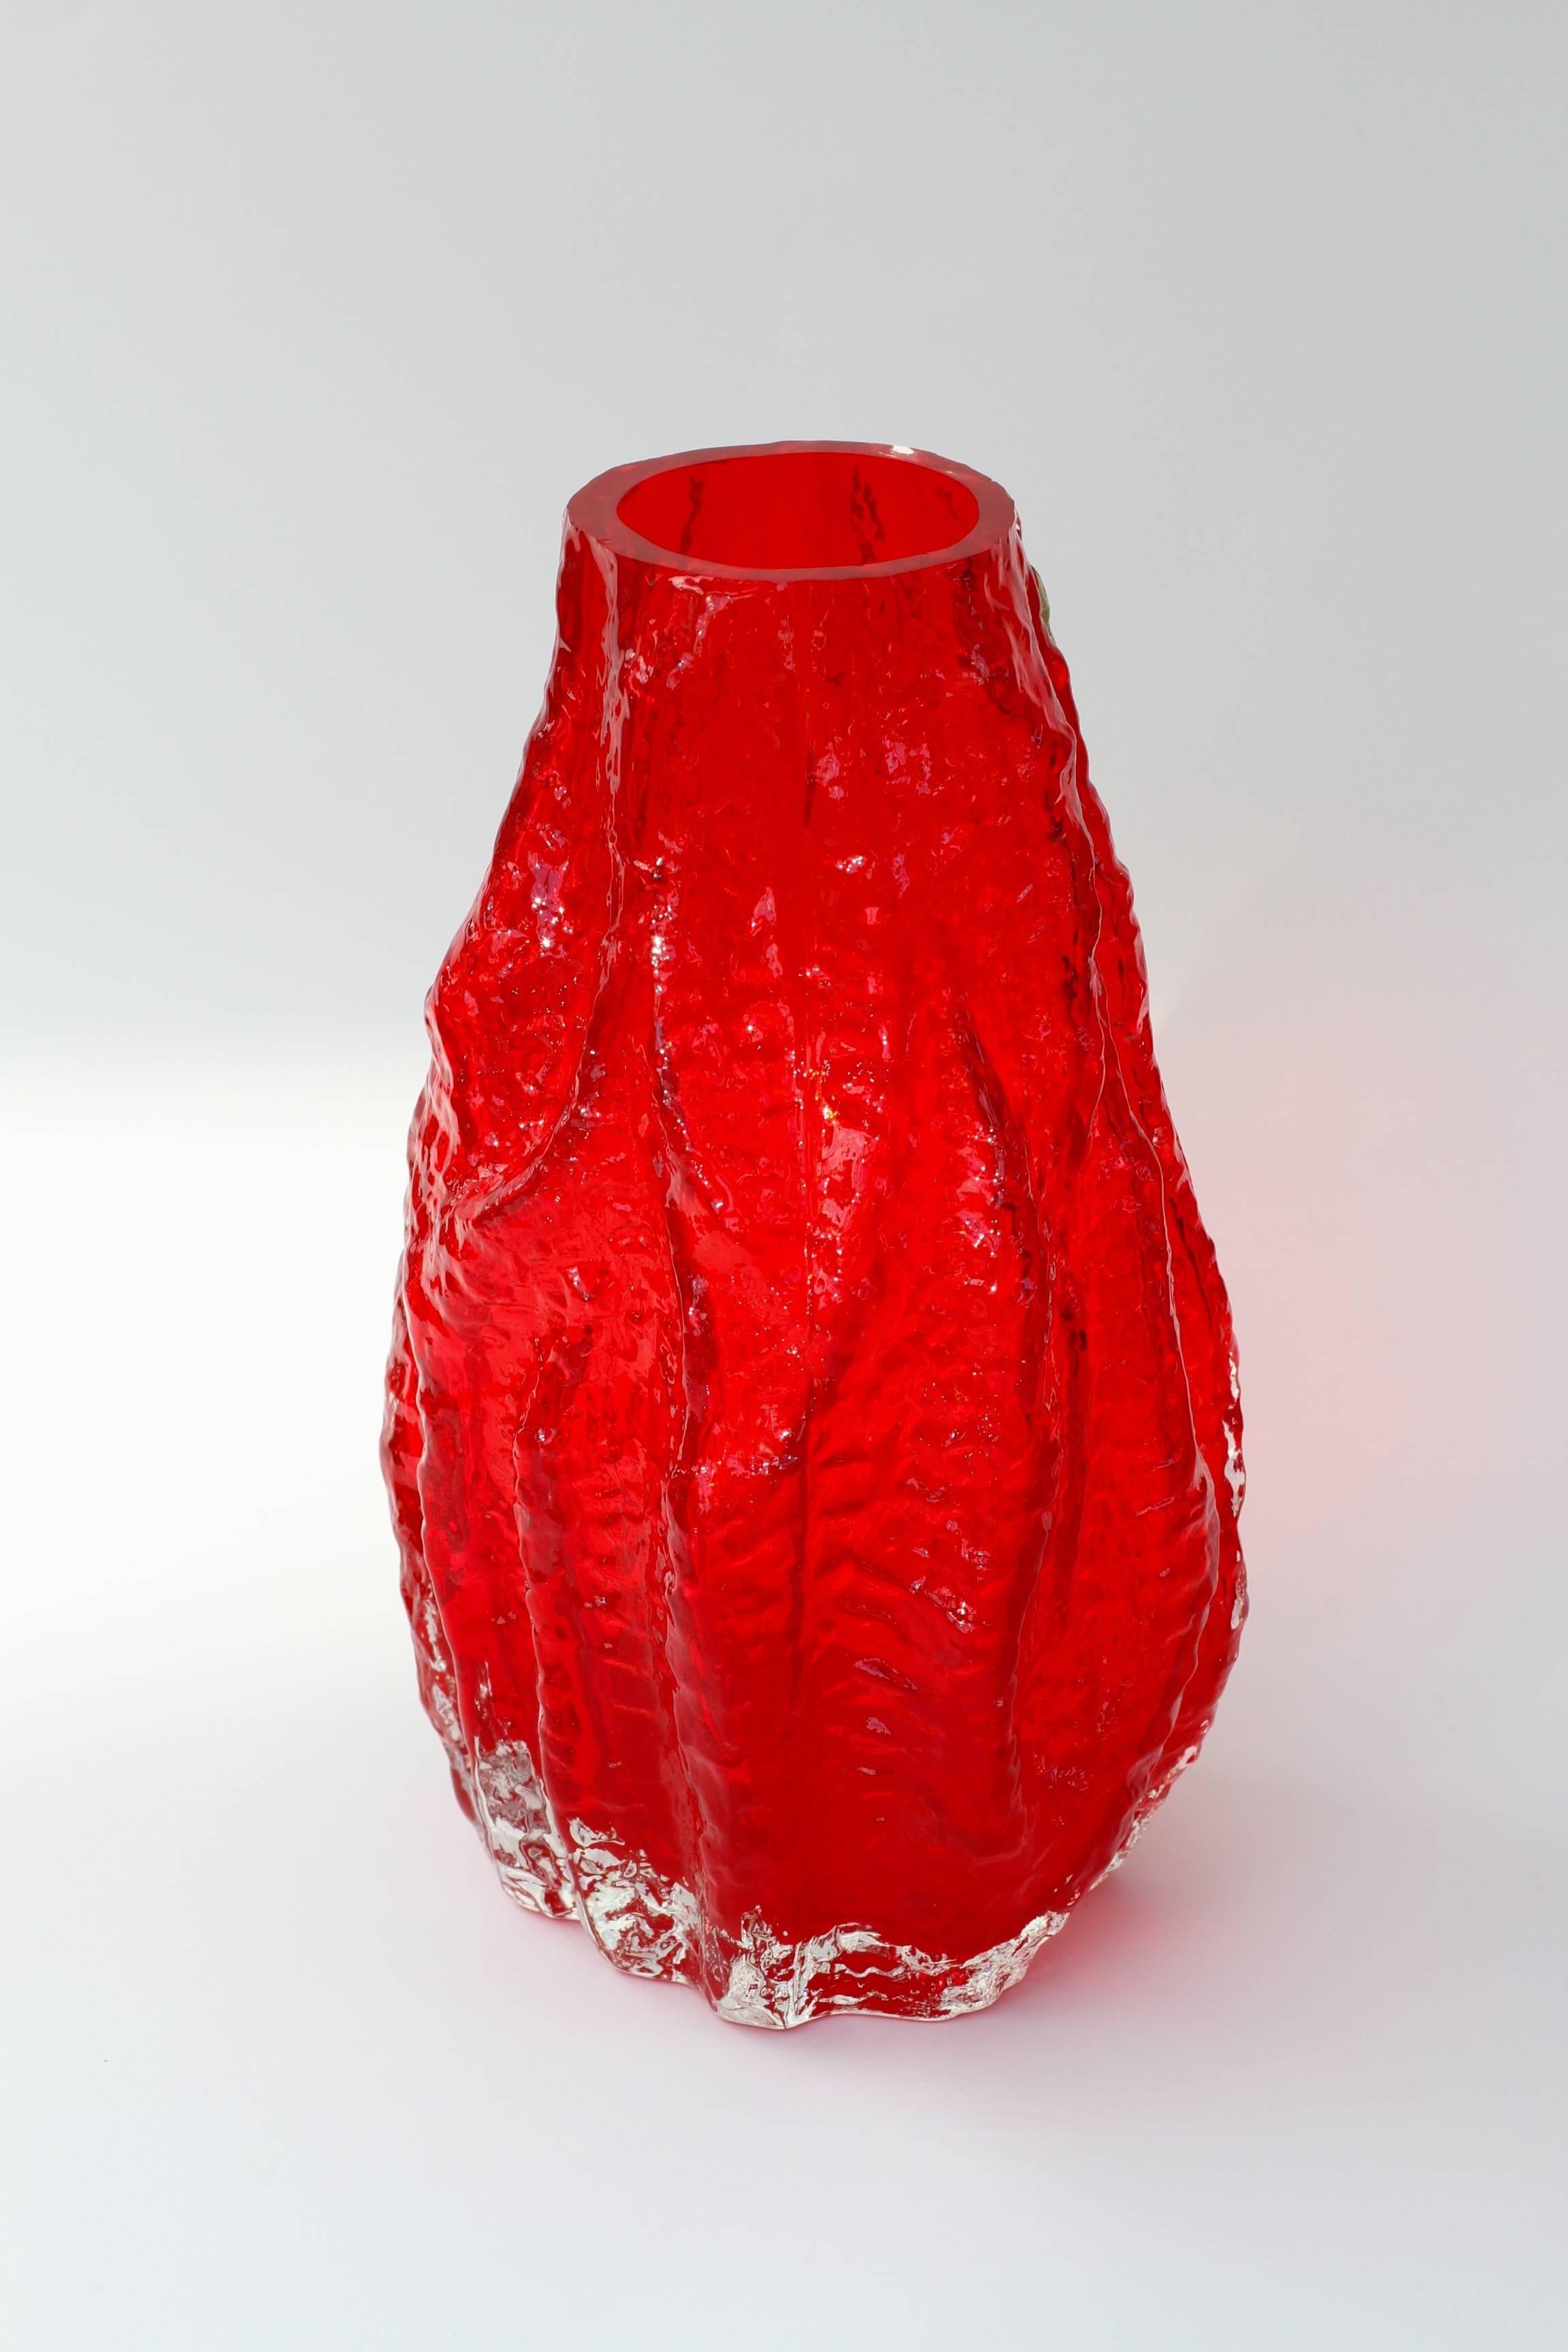 Molded Vintage German Vibrant Red Glass Tree Bark Vase by Ingrid Glas, circa 1970s